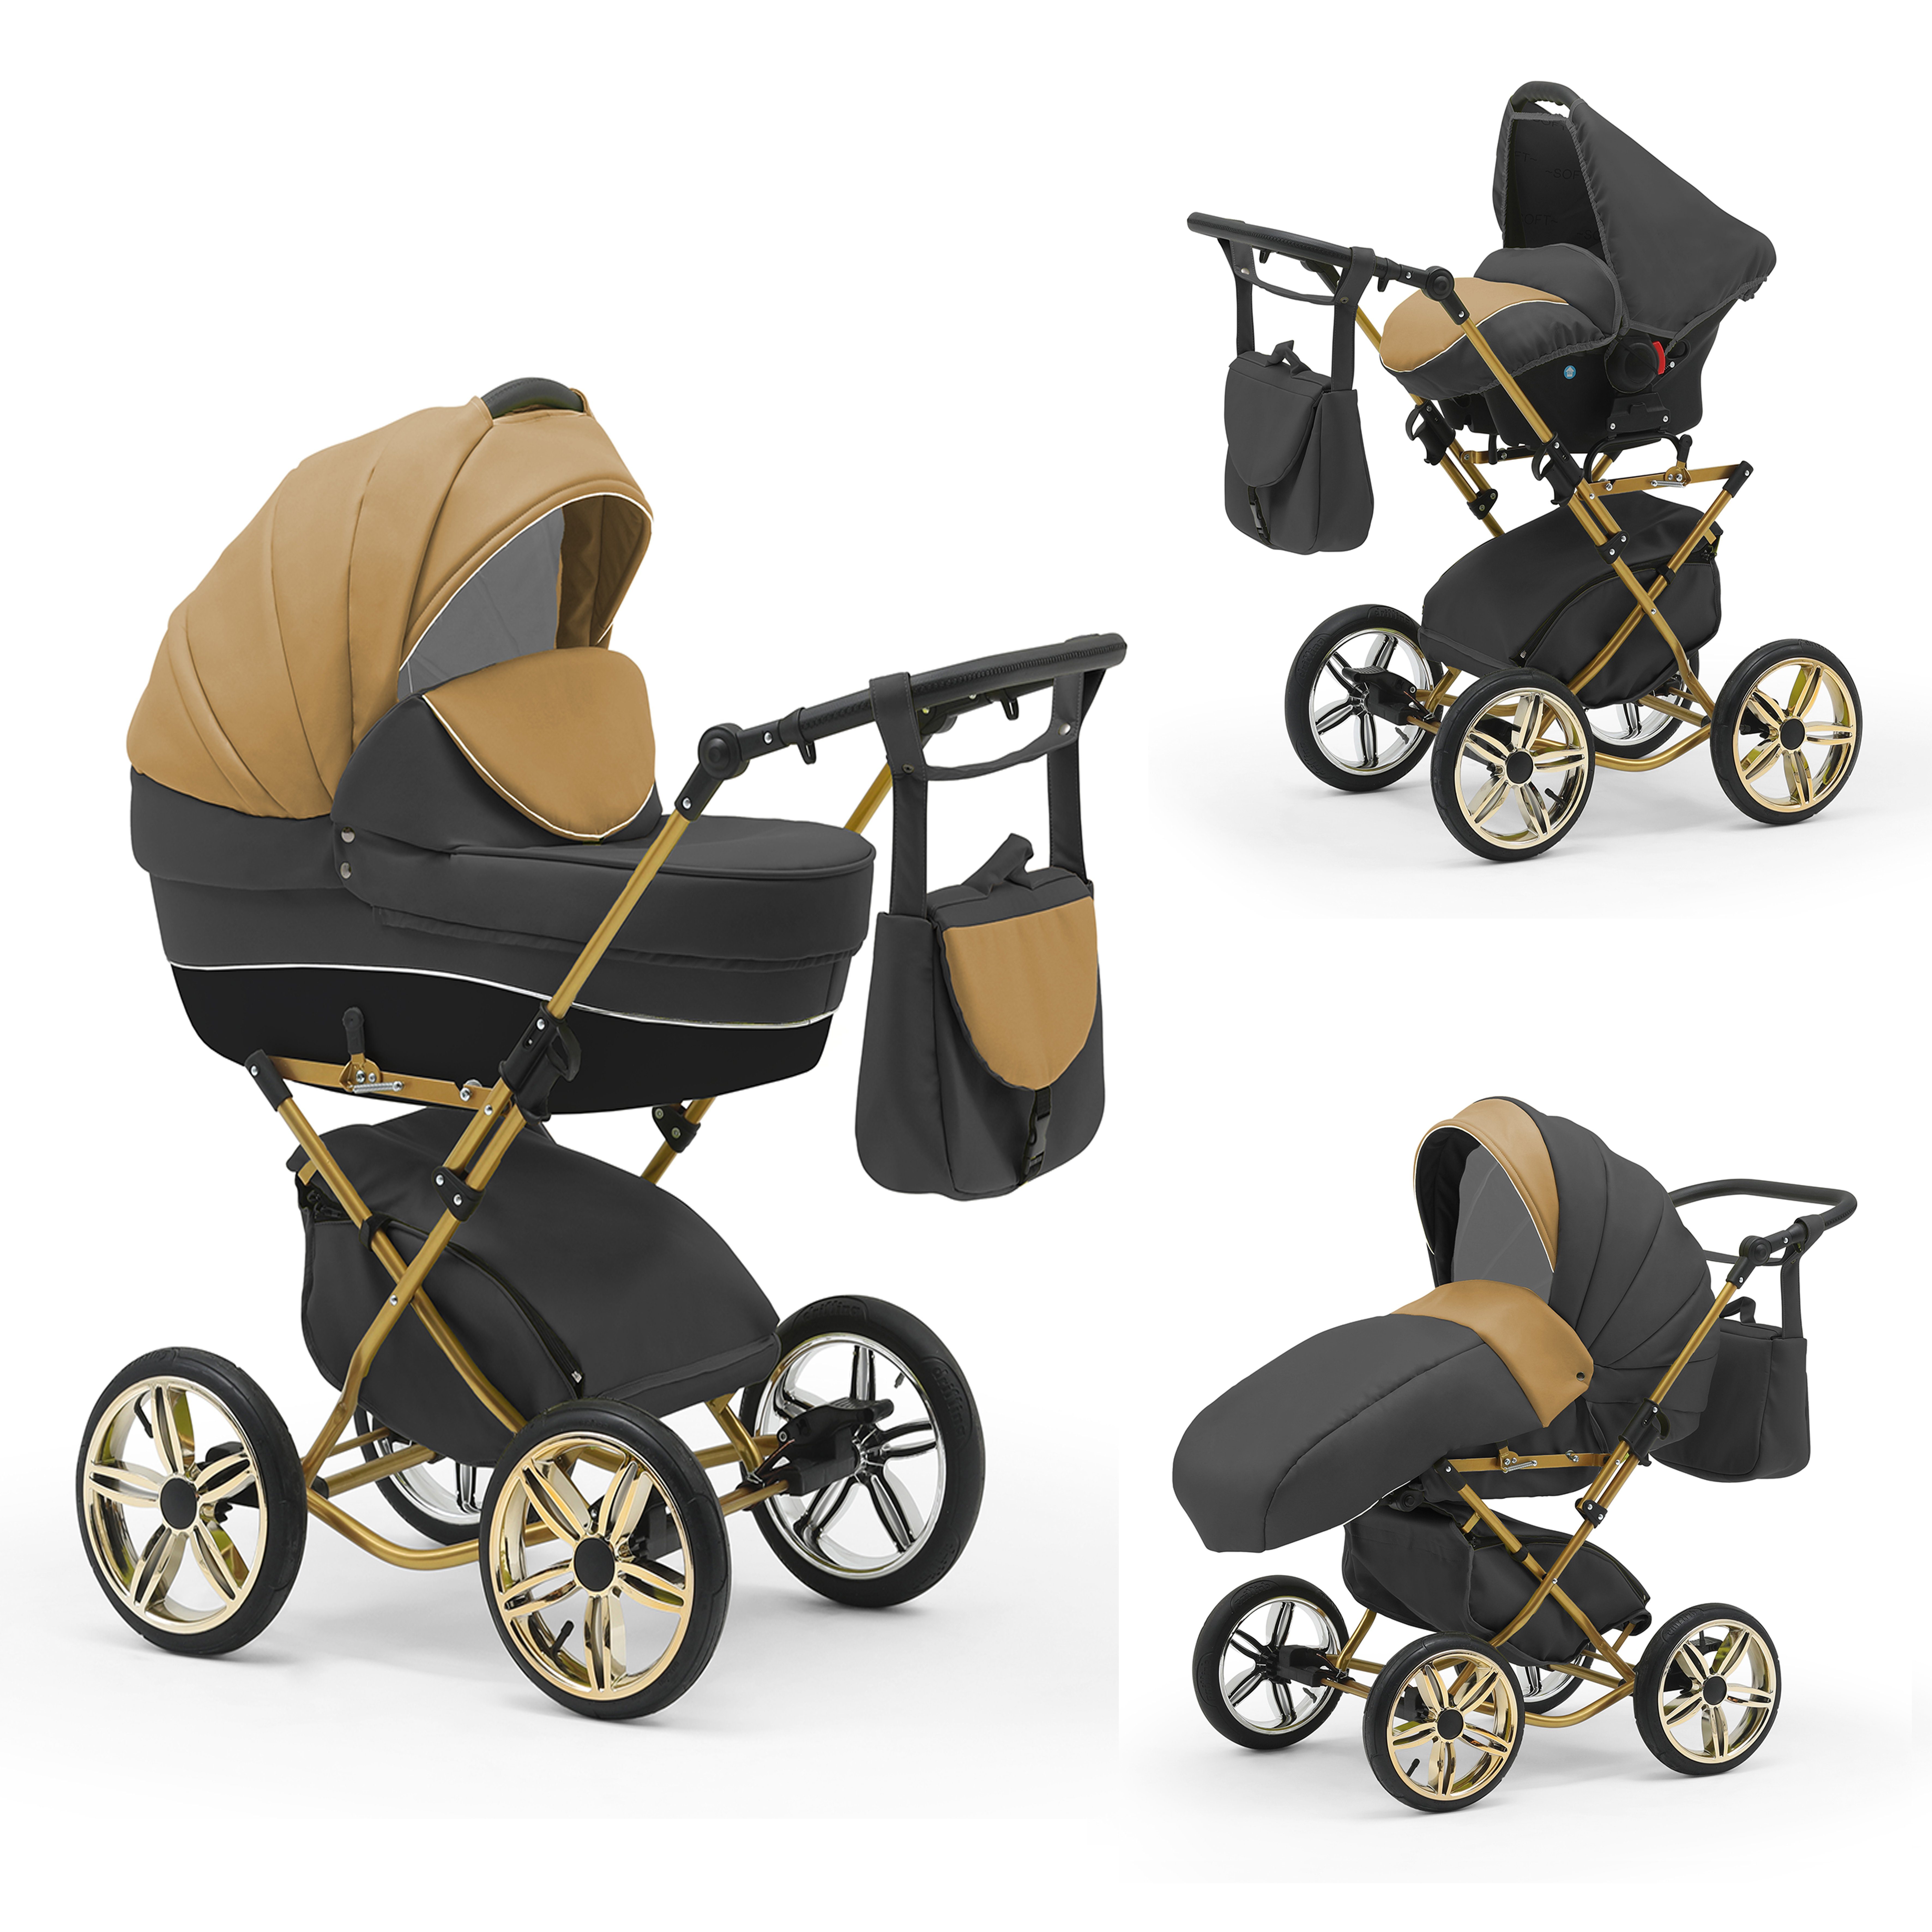 babies-on-wheels Kombi-Kinderwagen Sorento 3 in 1 inkl. Autositz - 13 Teile - in 10 Designs Beige-Grau